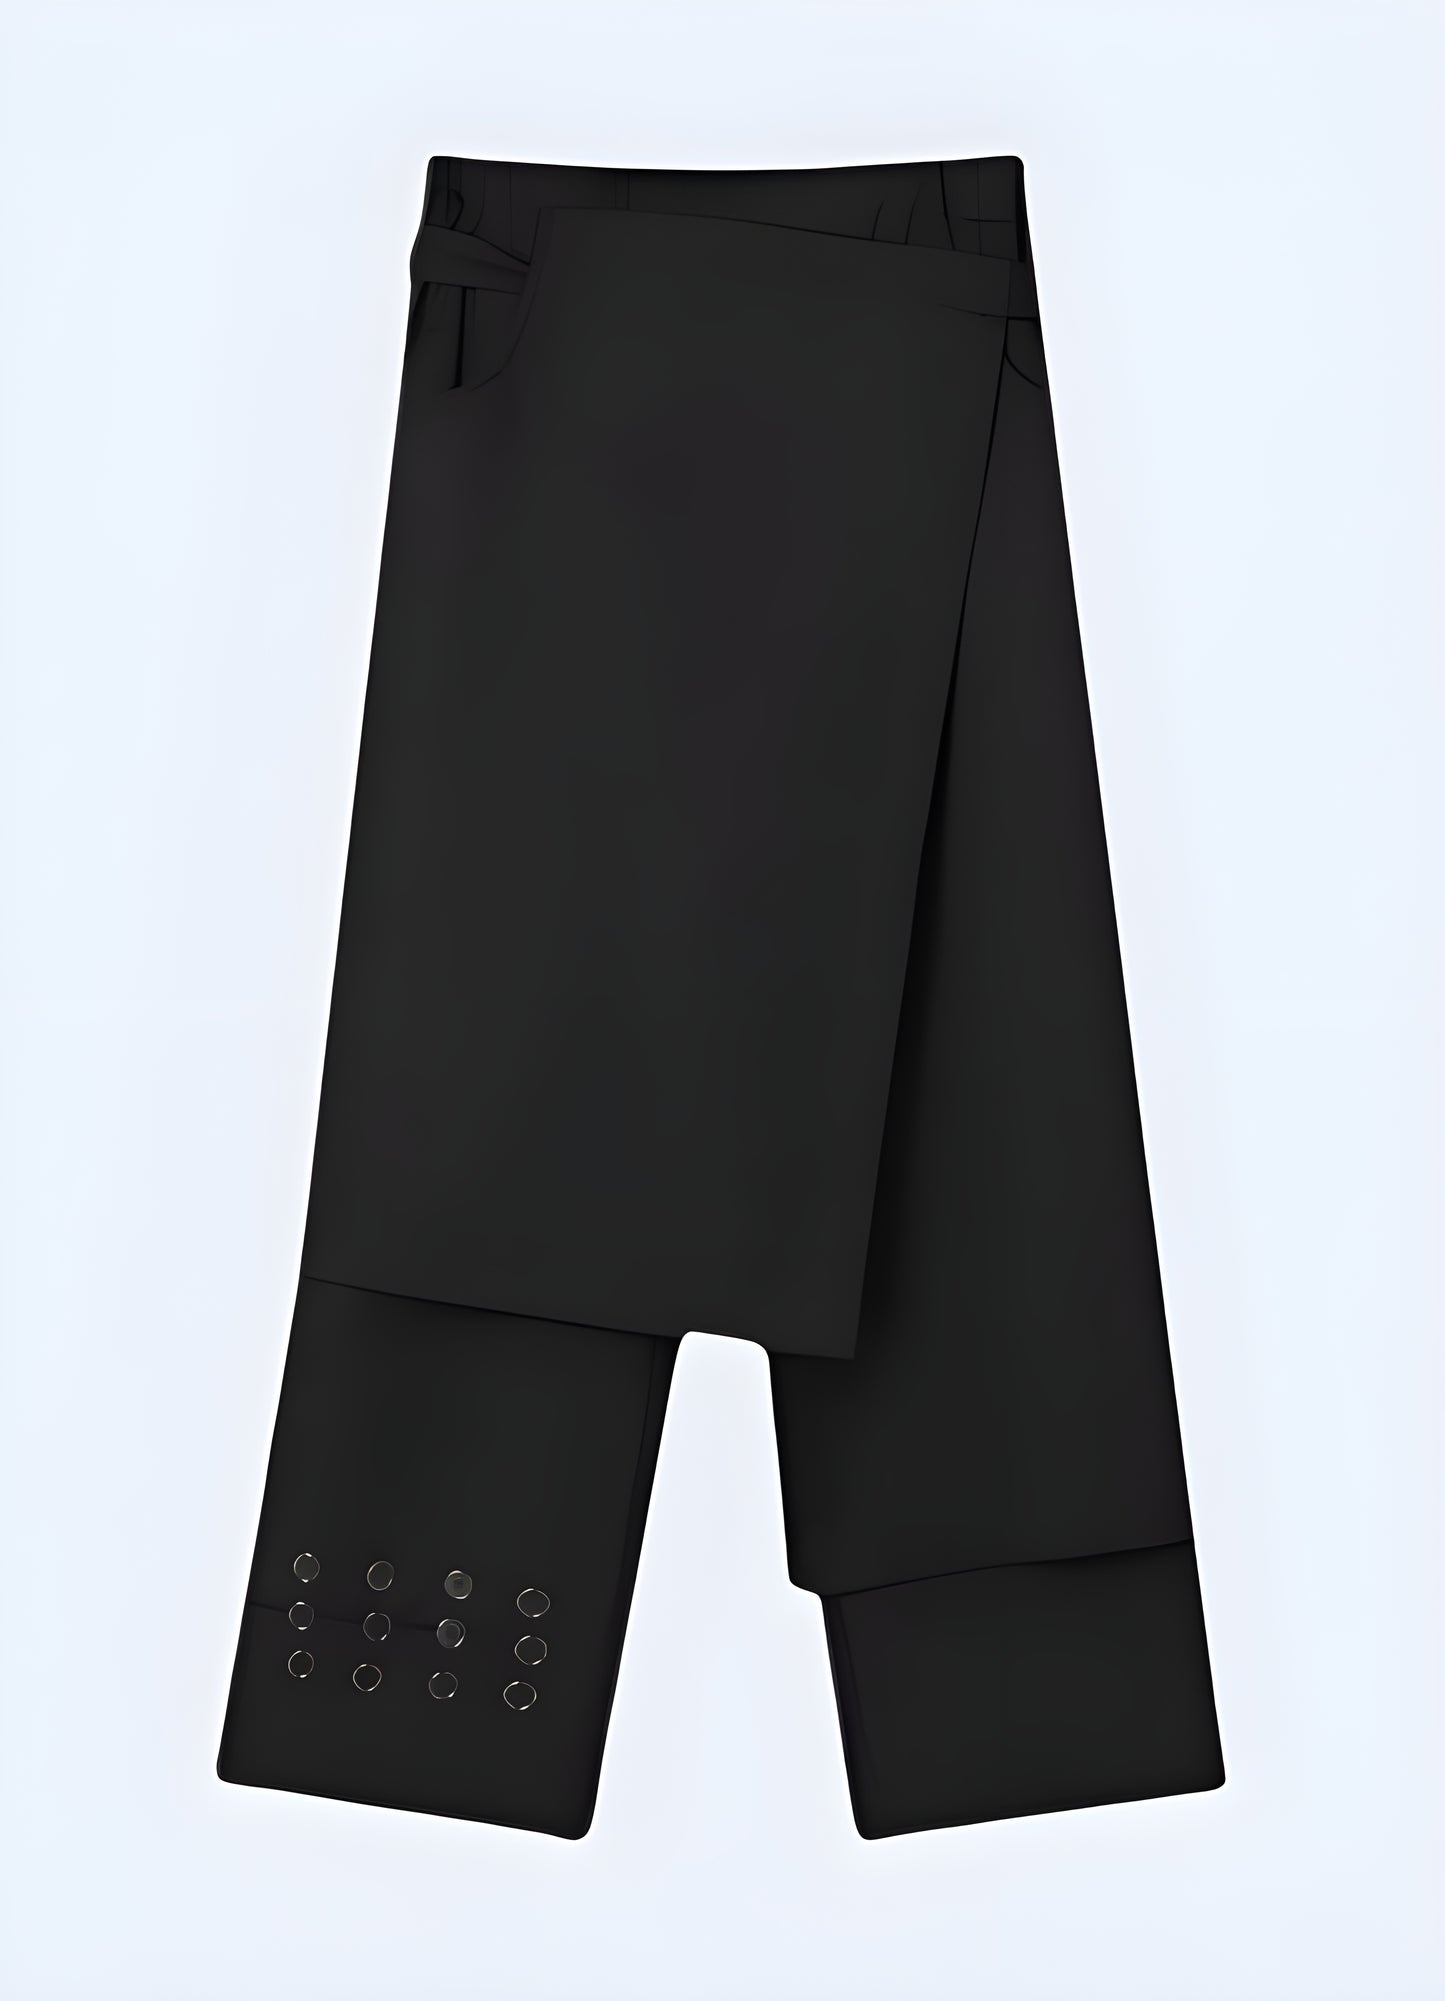 Dark hakama-style pants front view.